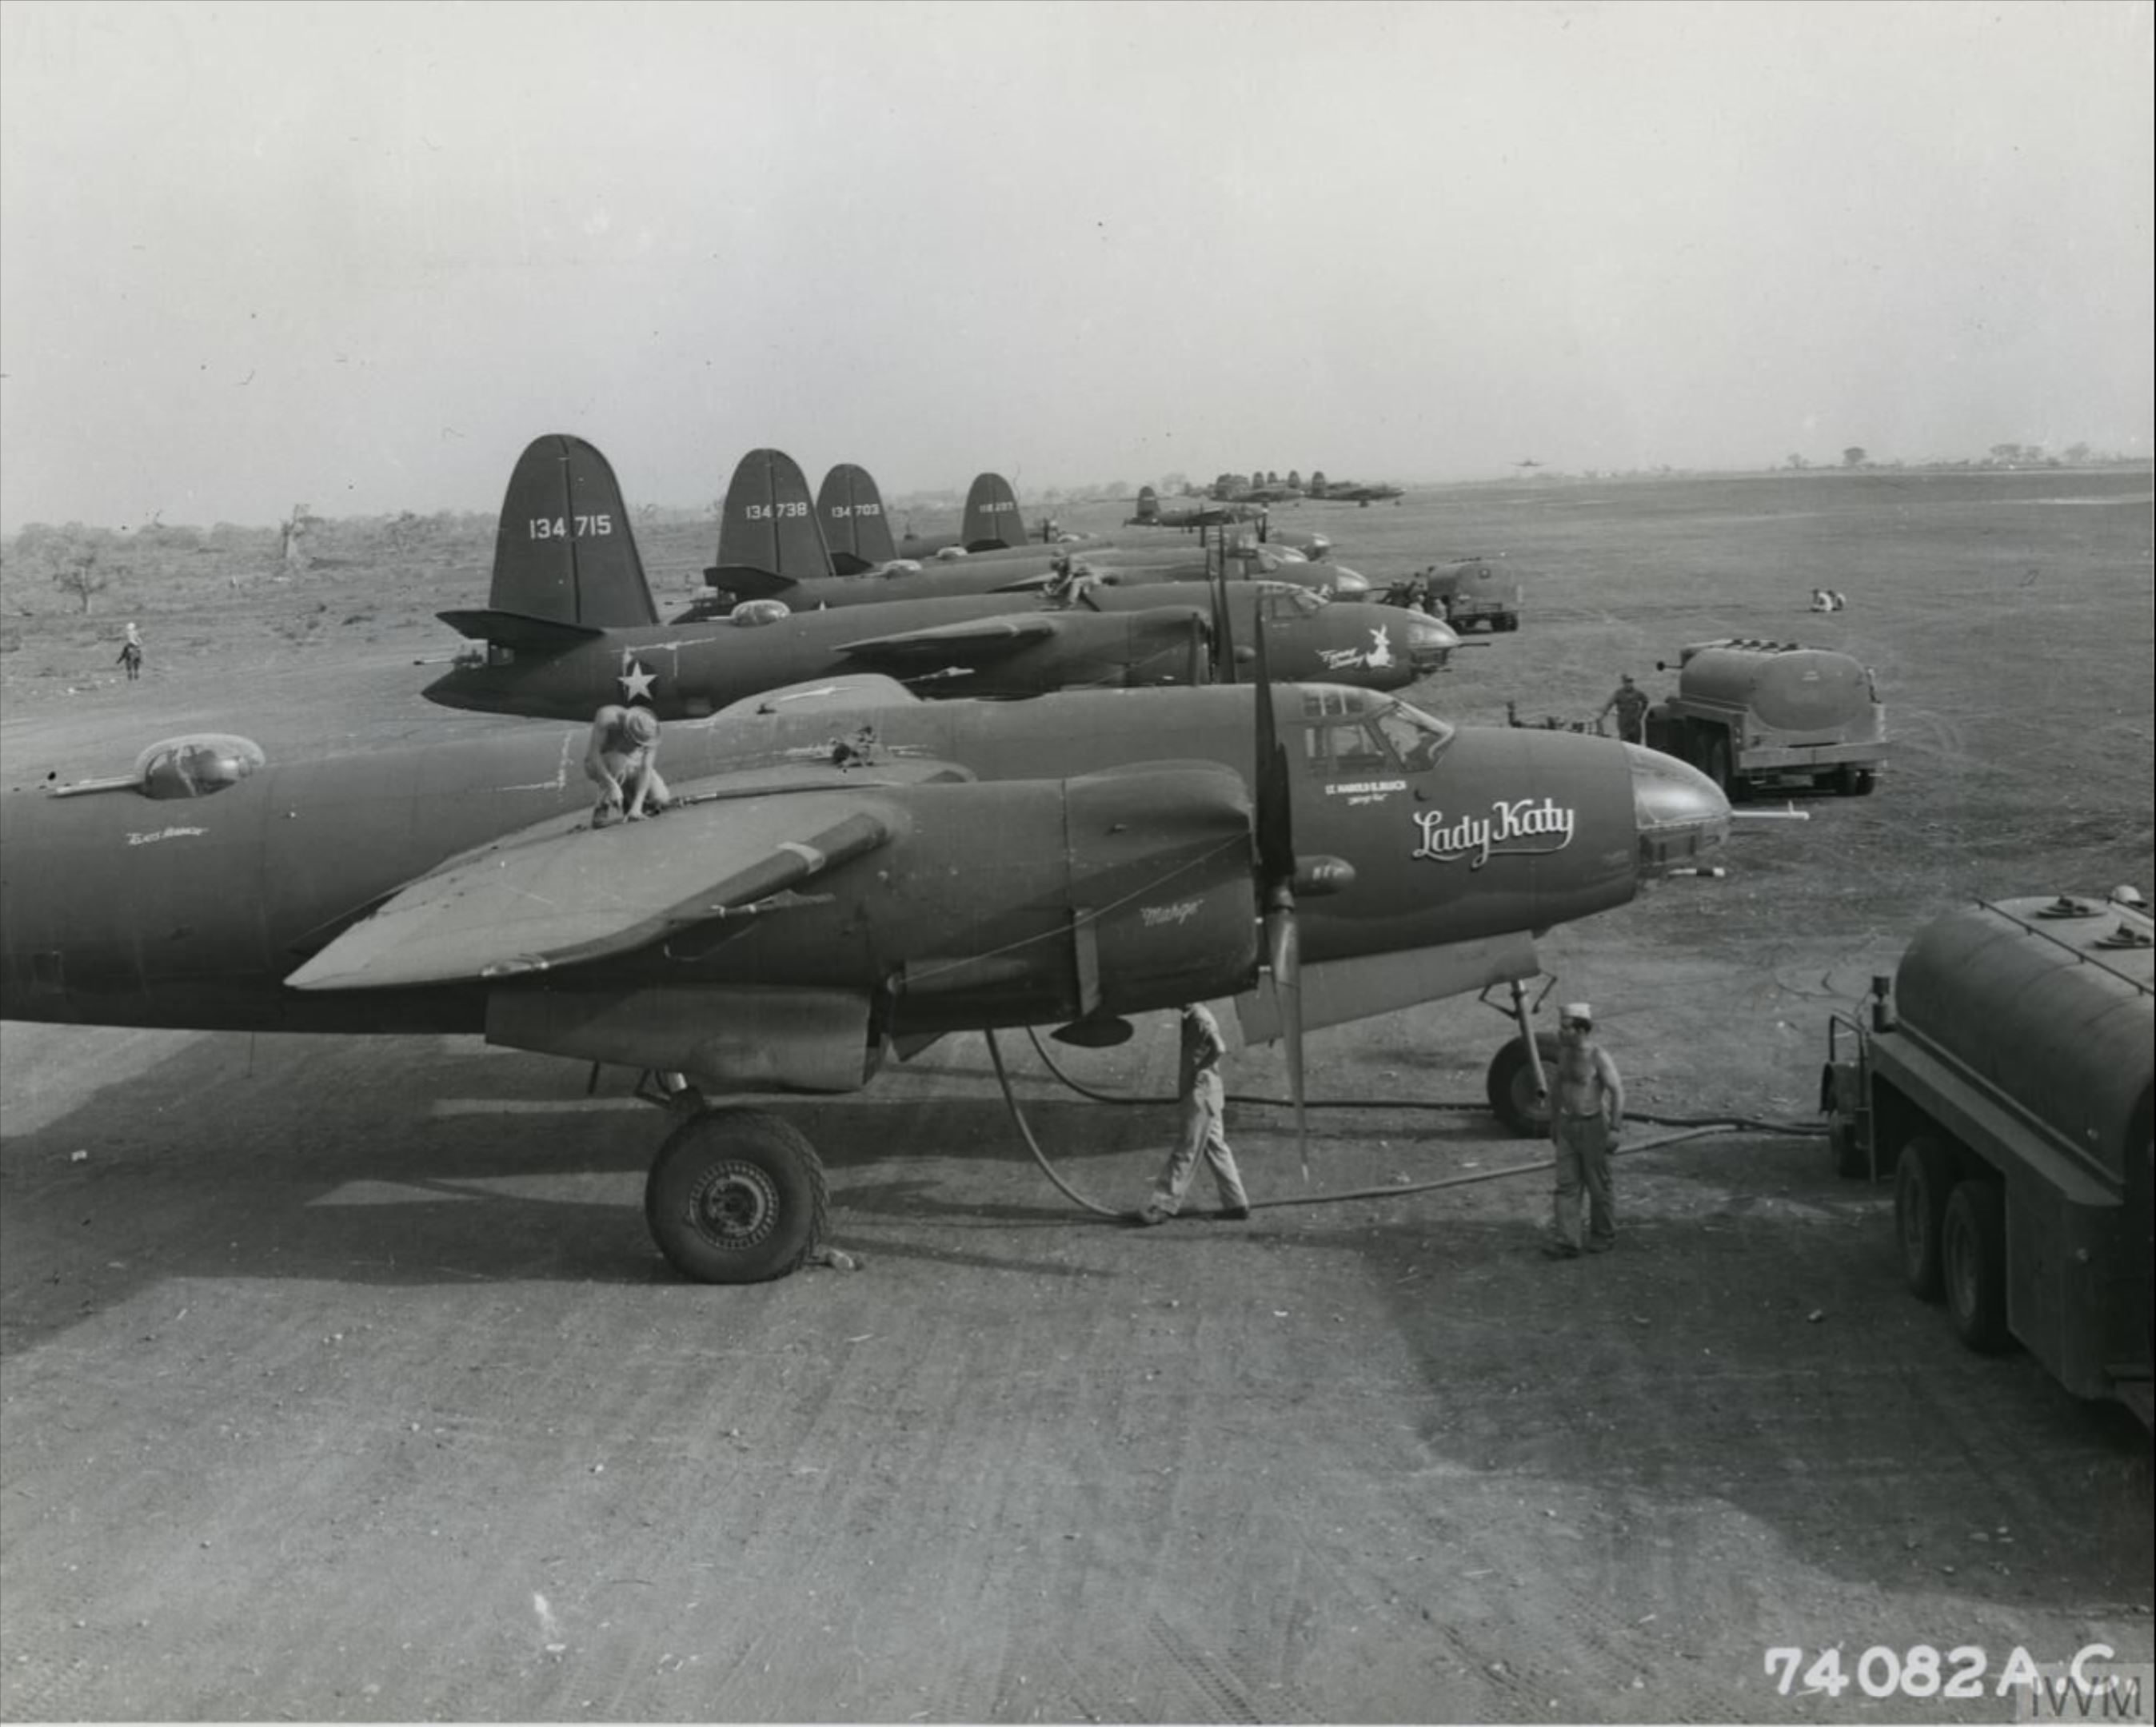 41 18285 B 26B Marauder 8AF 323BG454BS RJ Lady Katy being refueled at Rufisque Senegal Jun 1943 FRE13263